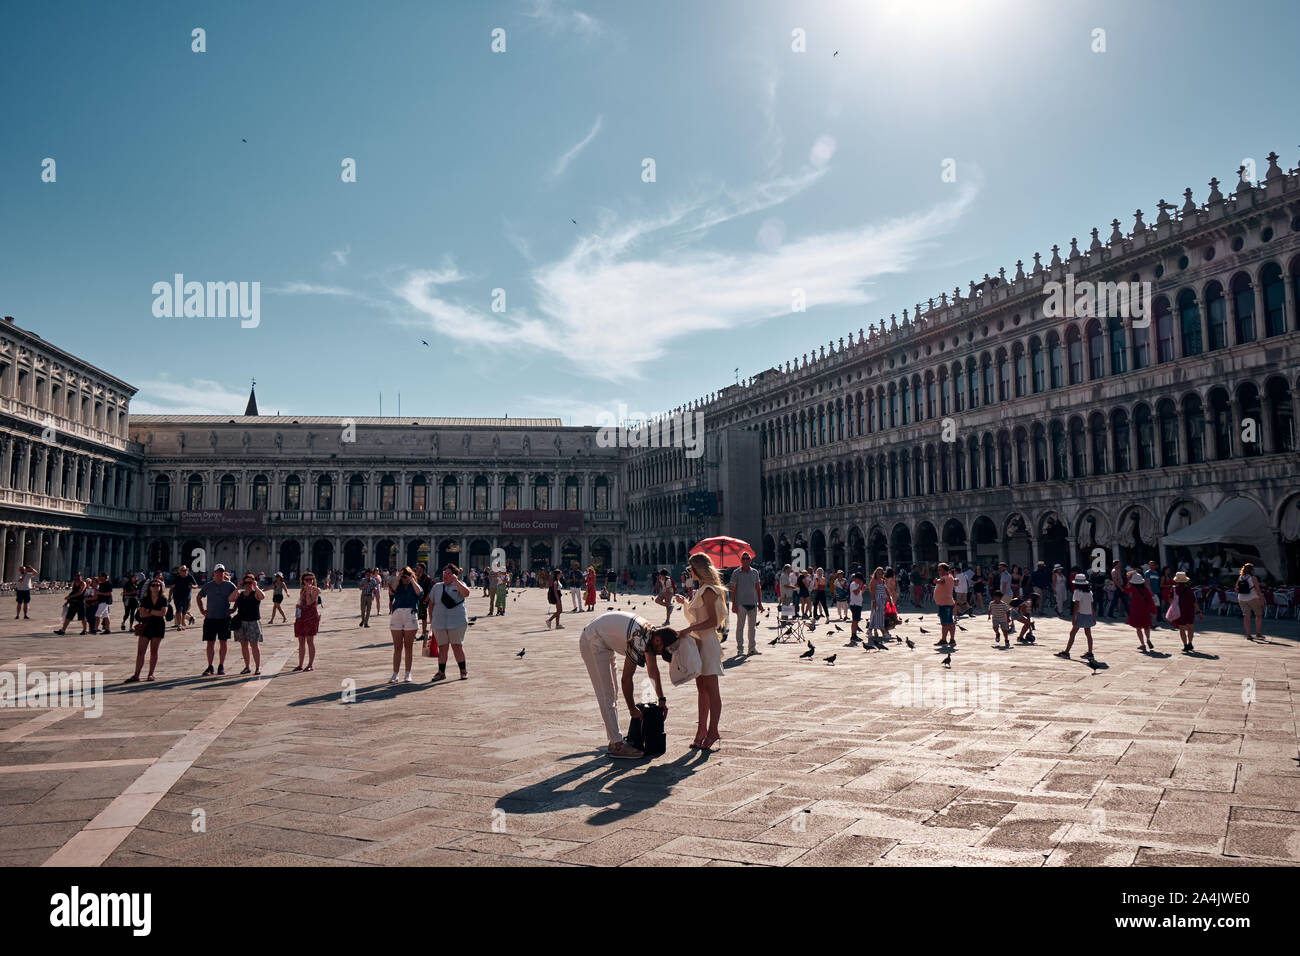 Venice, Italy - June 19, 2019: The landscape around St. Mark's Basilica and square in Venice city, Italy Stock Photo